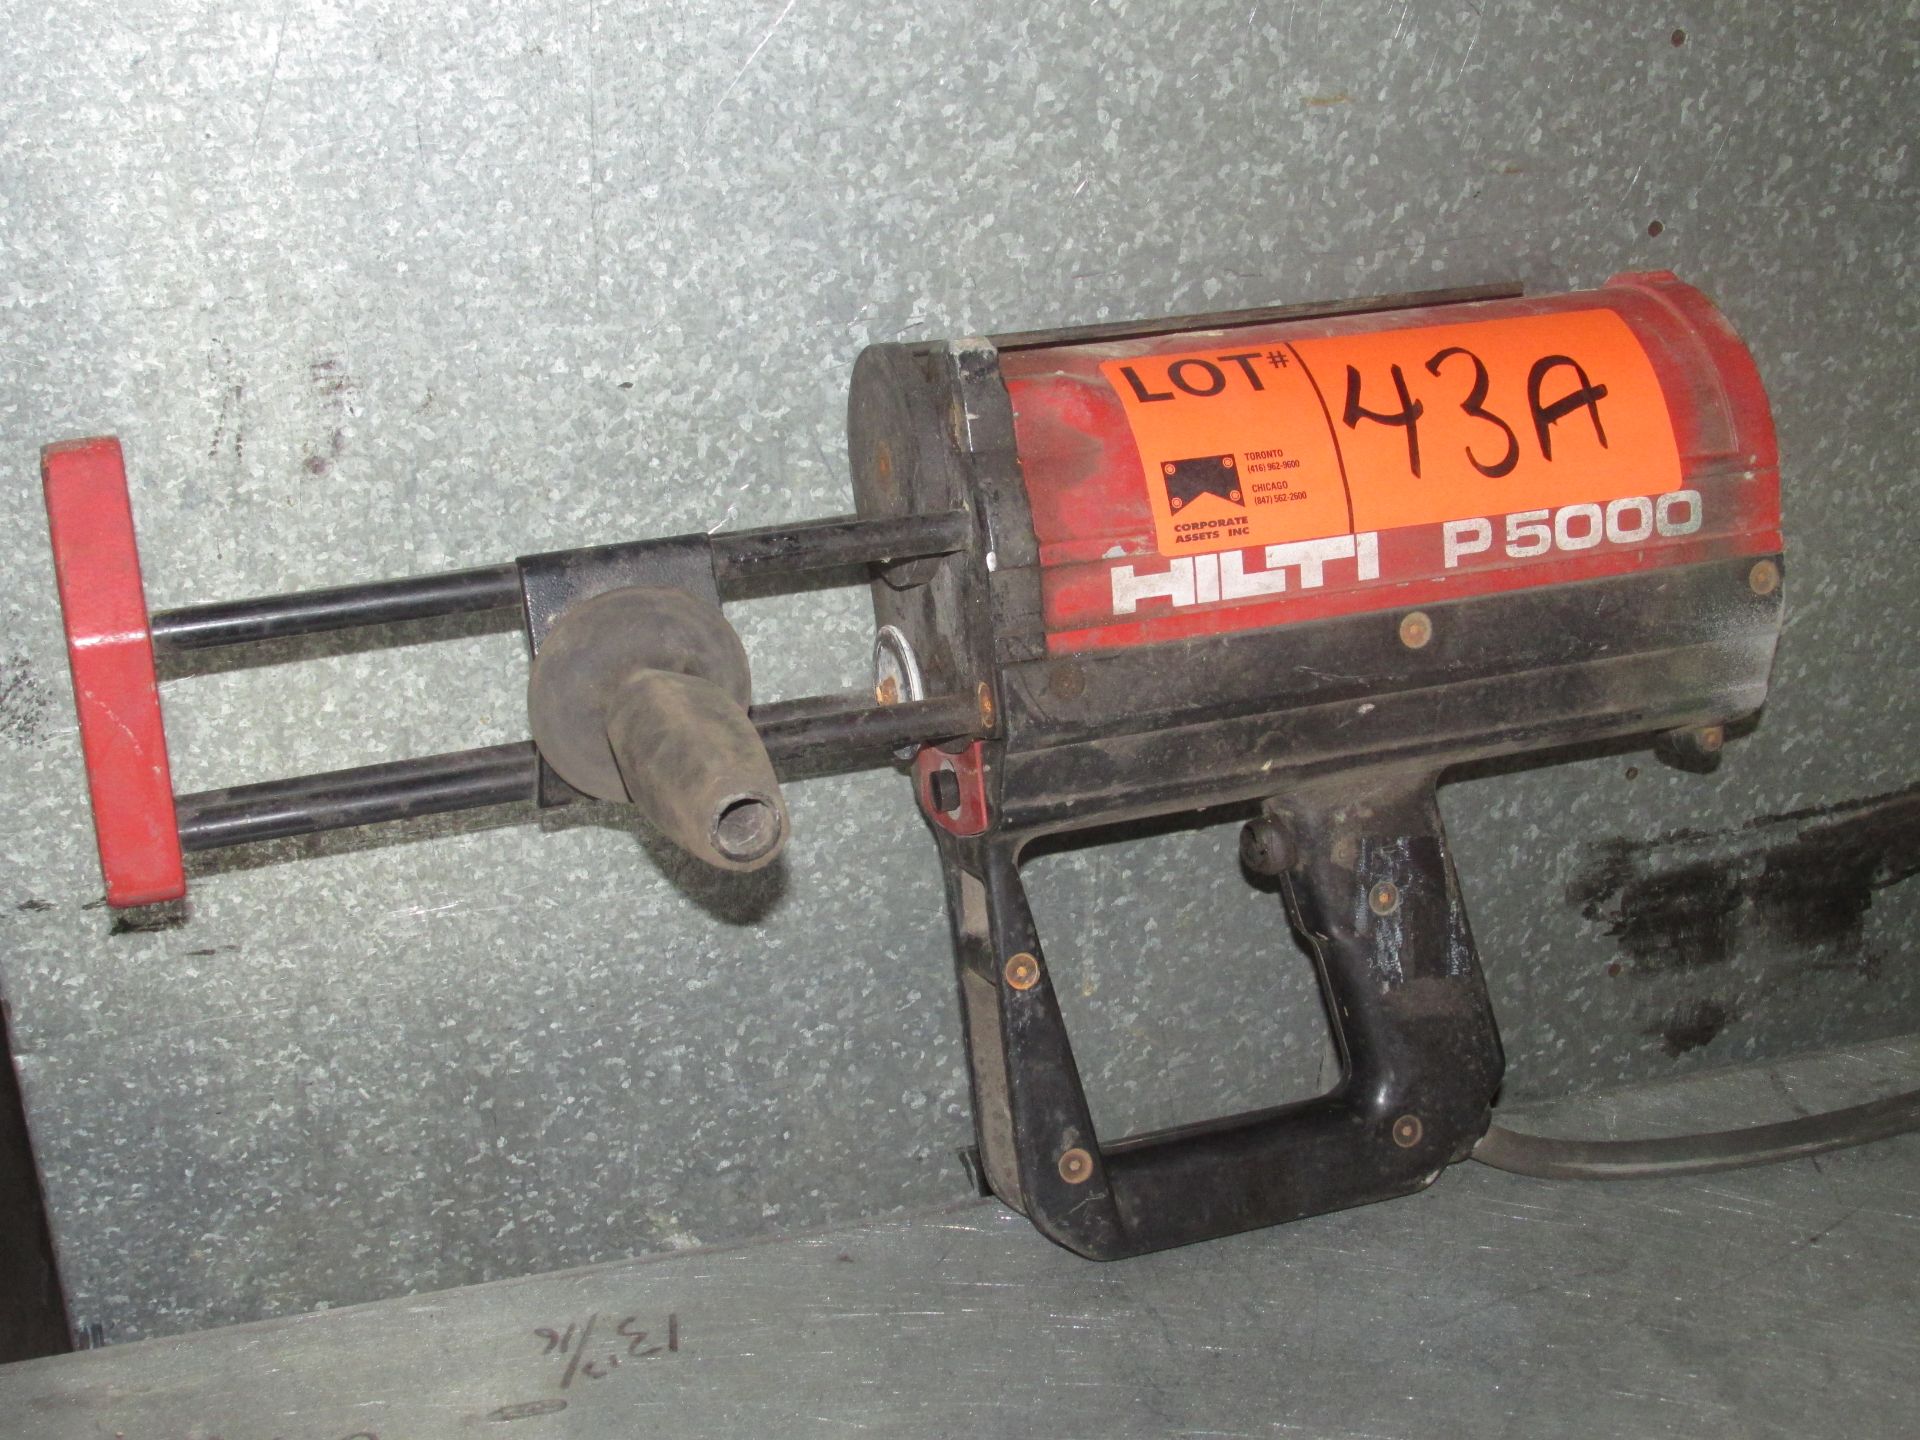 HILTI P5000 PNEUMATIC CAULKING GUN